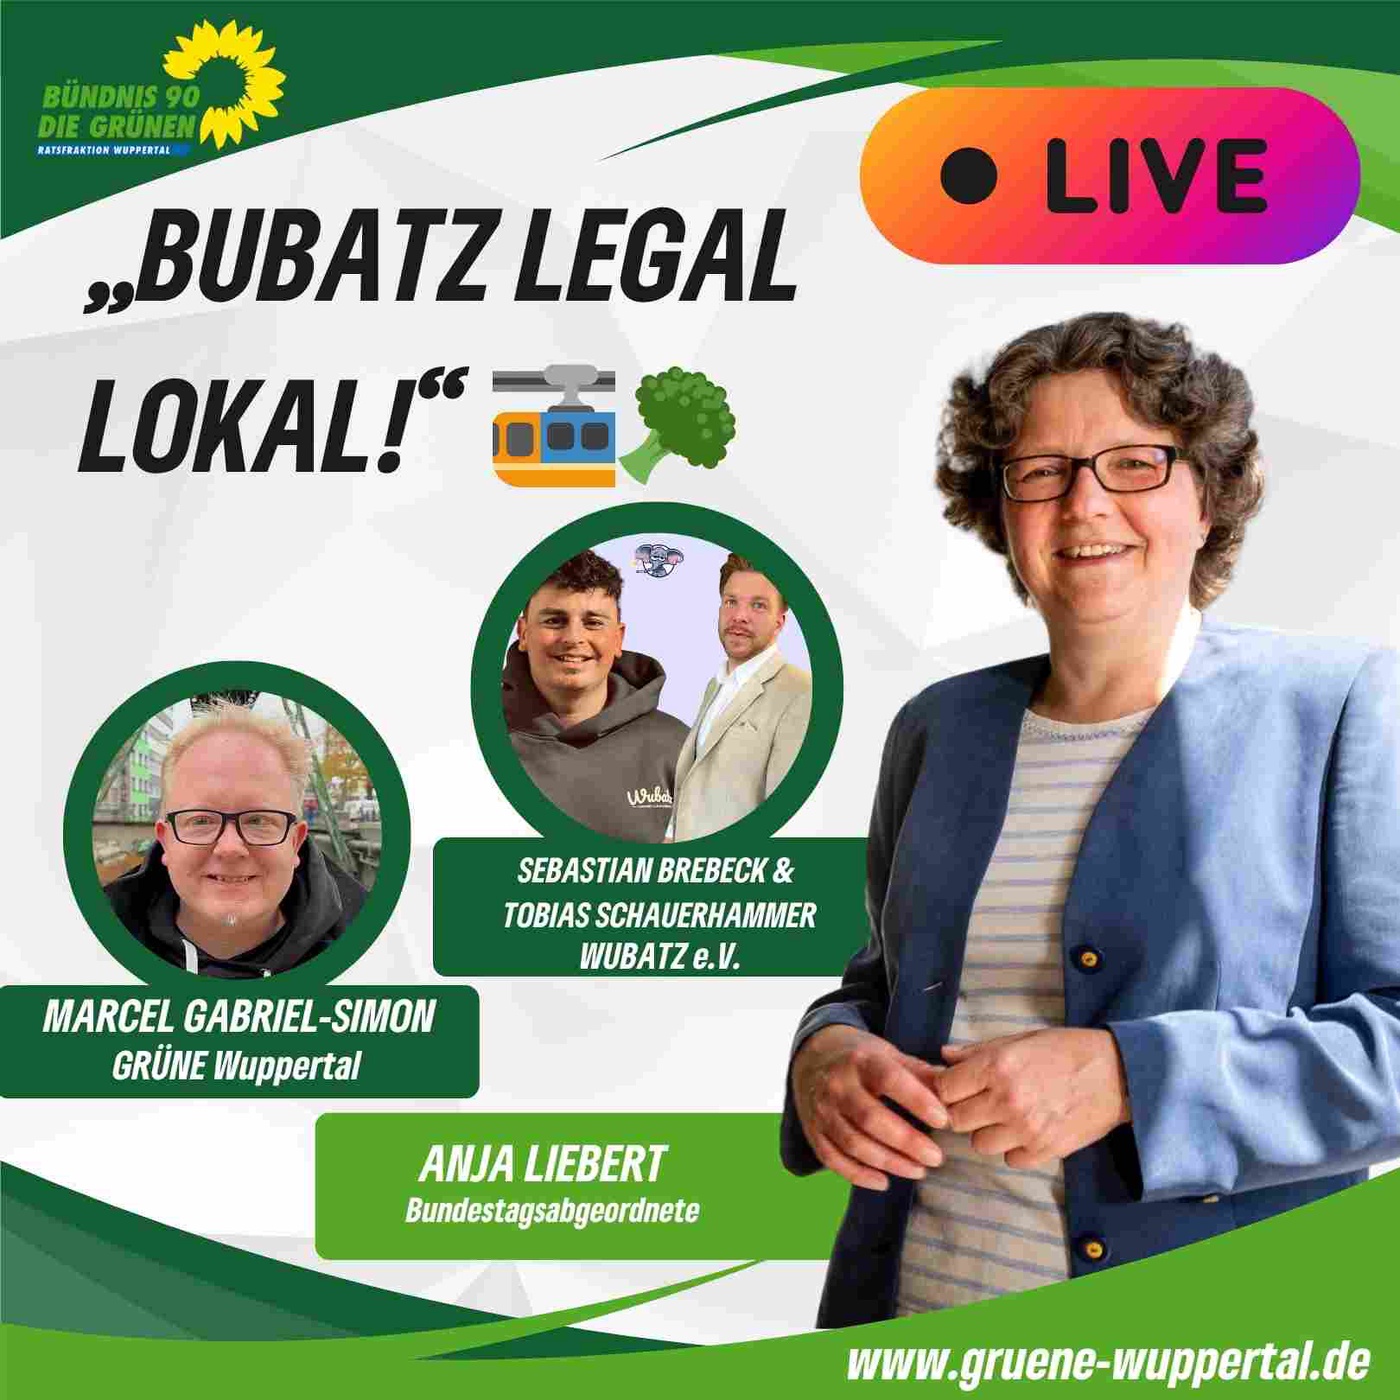 Bubatz legal lokal! - mit Wubatz e.V., Anja Liebert und Marcel-Gabriel Simon